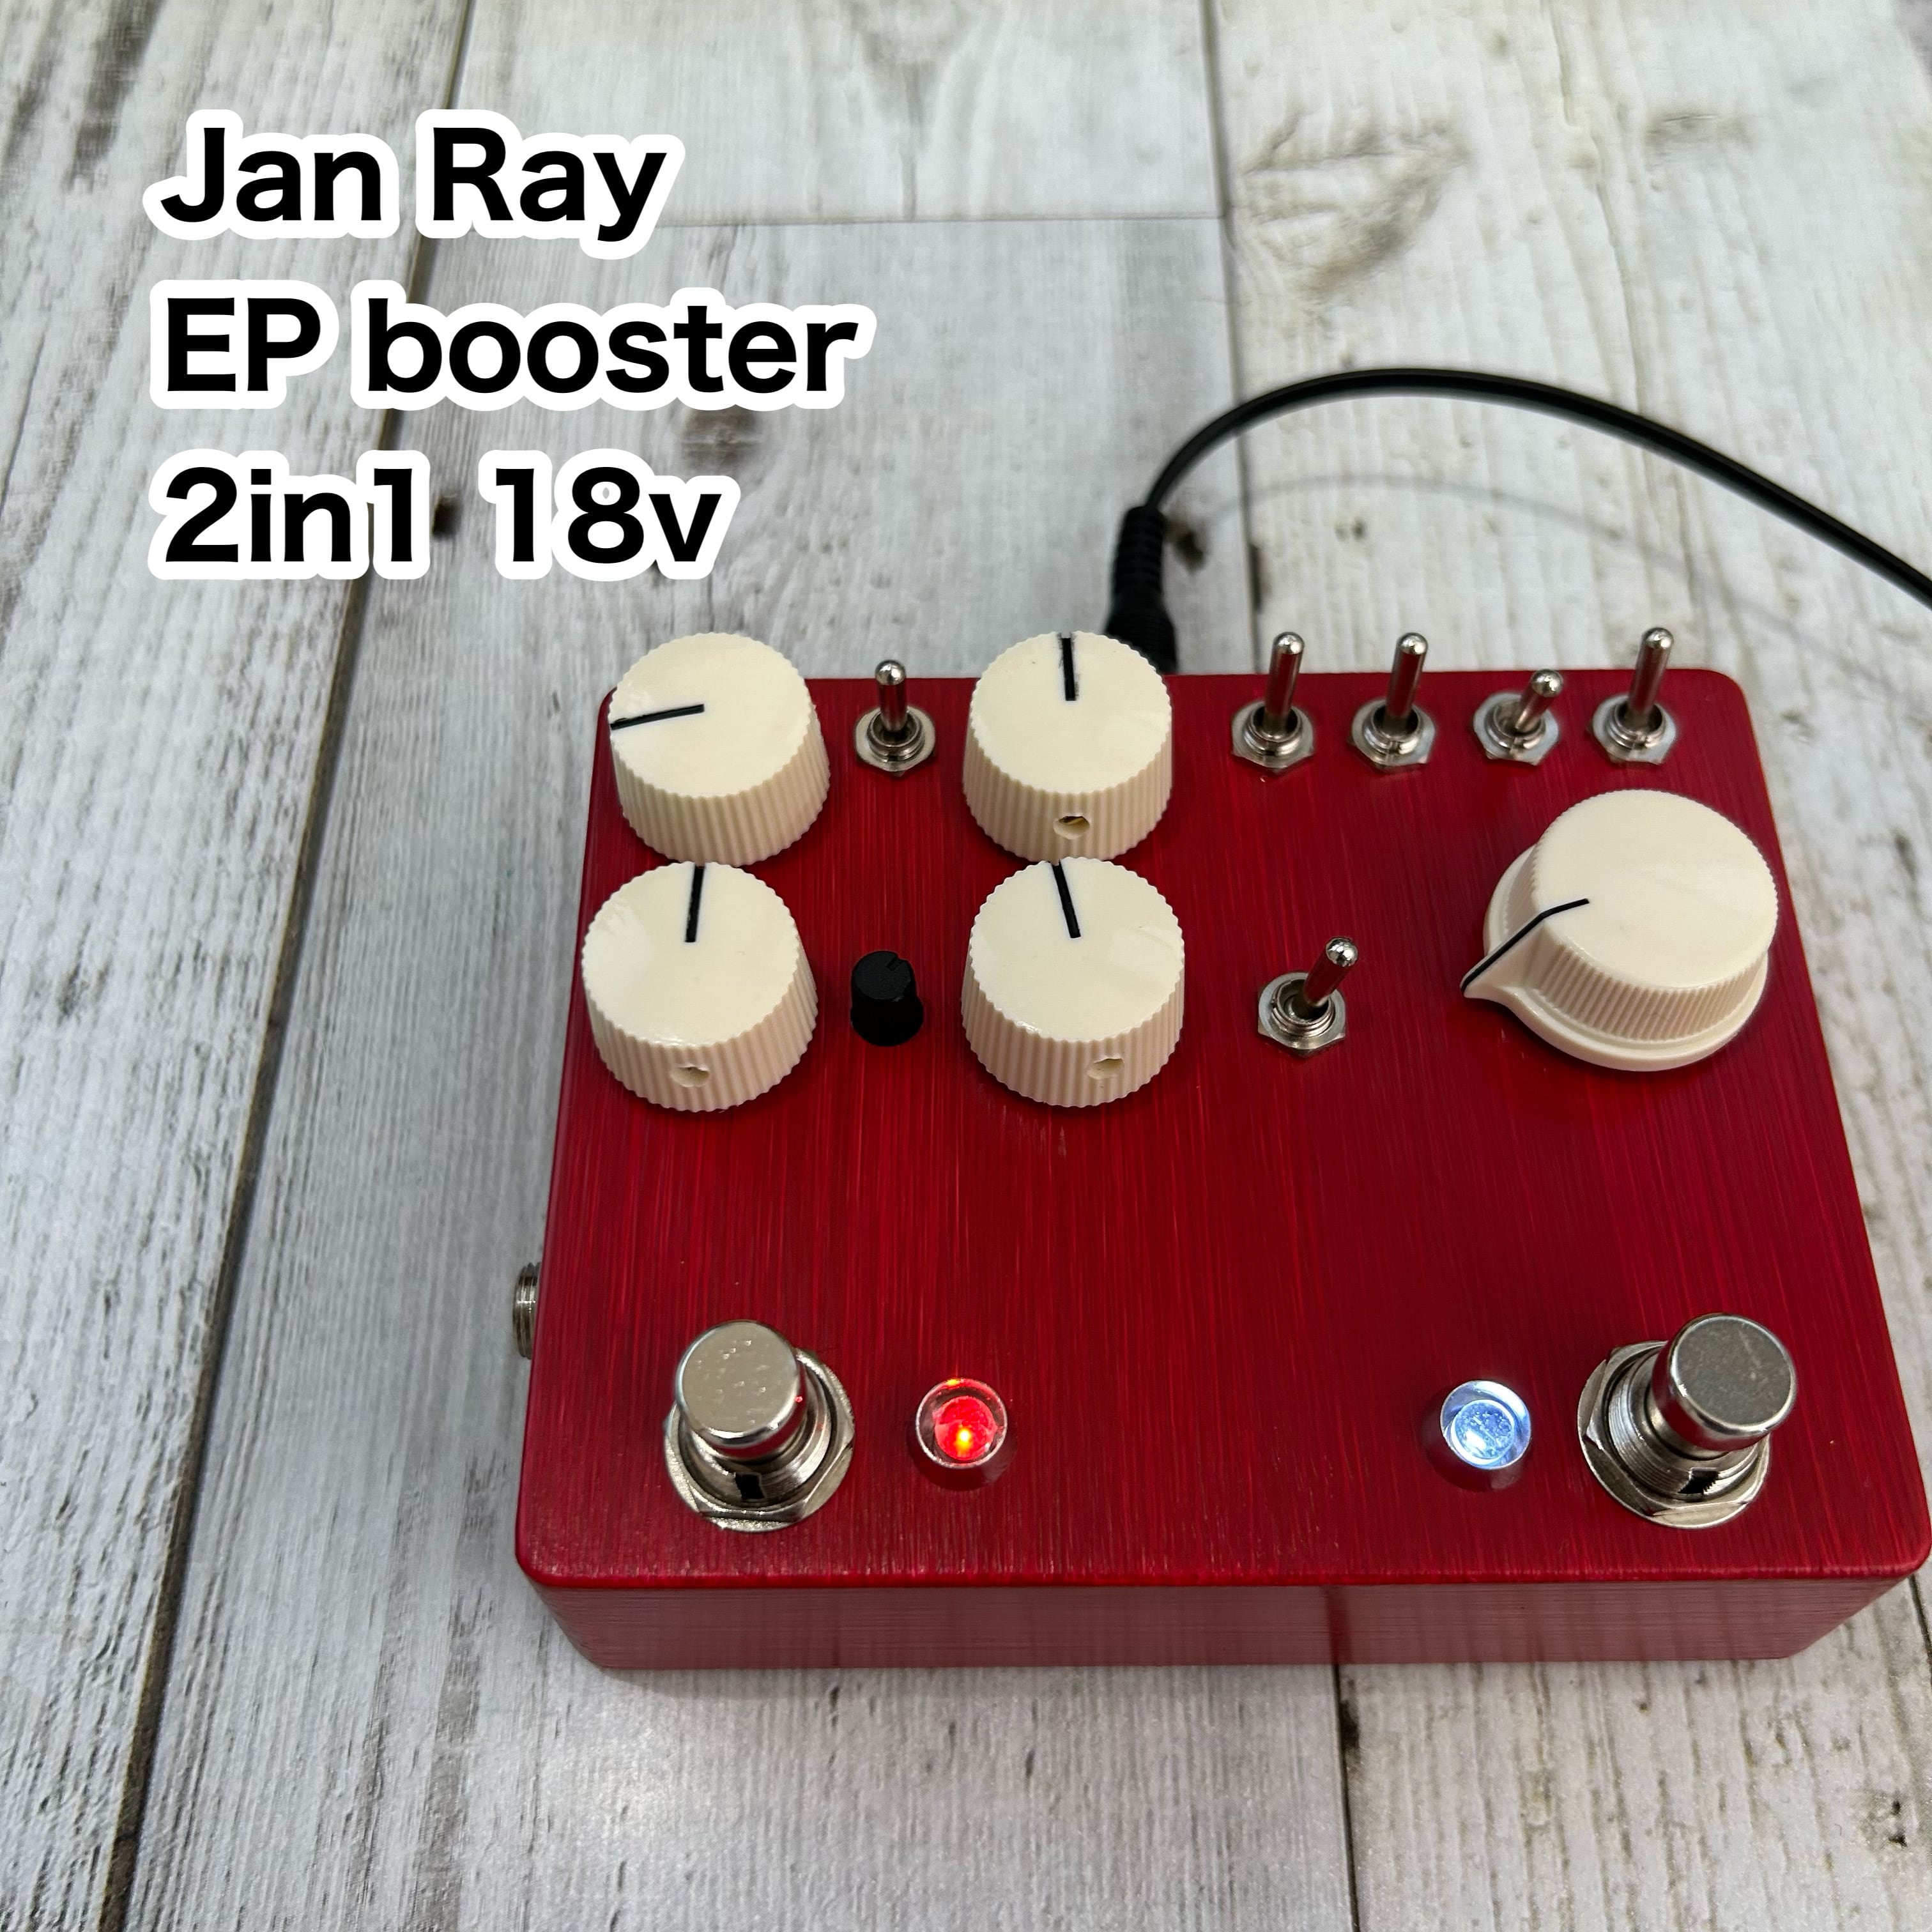 Jan Ray + EP booster 2in1 18v - 通販 - gofukuyasan.com